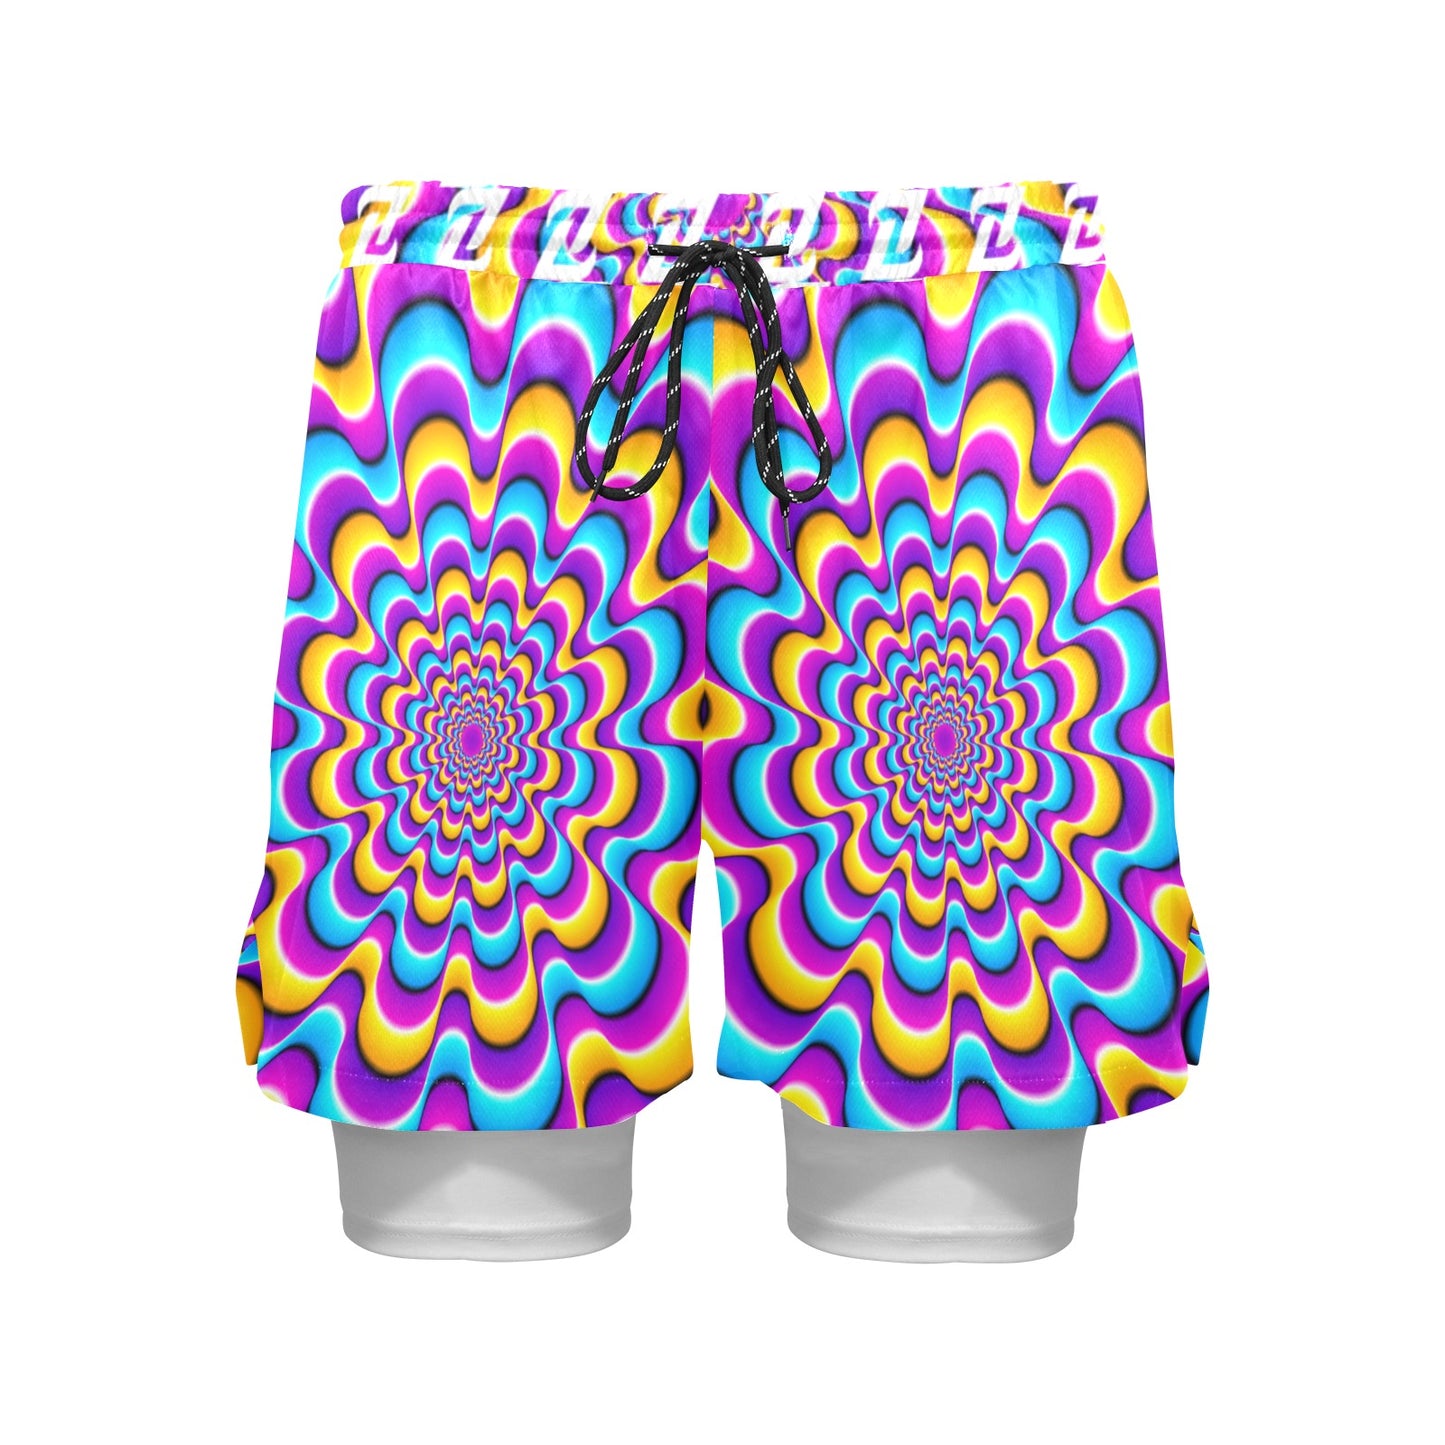 Zen Shorts with Liner - Hypnotic